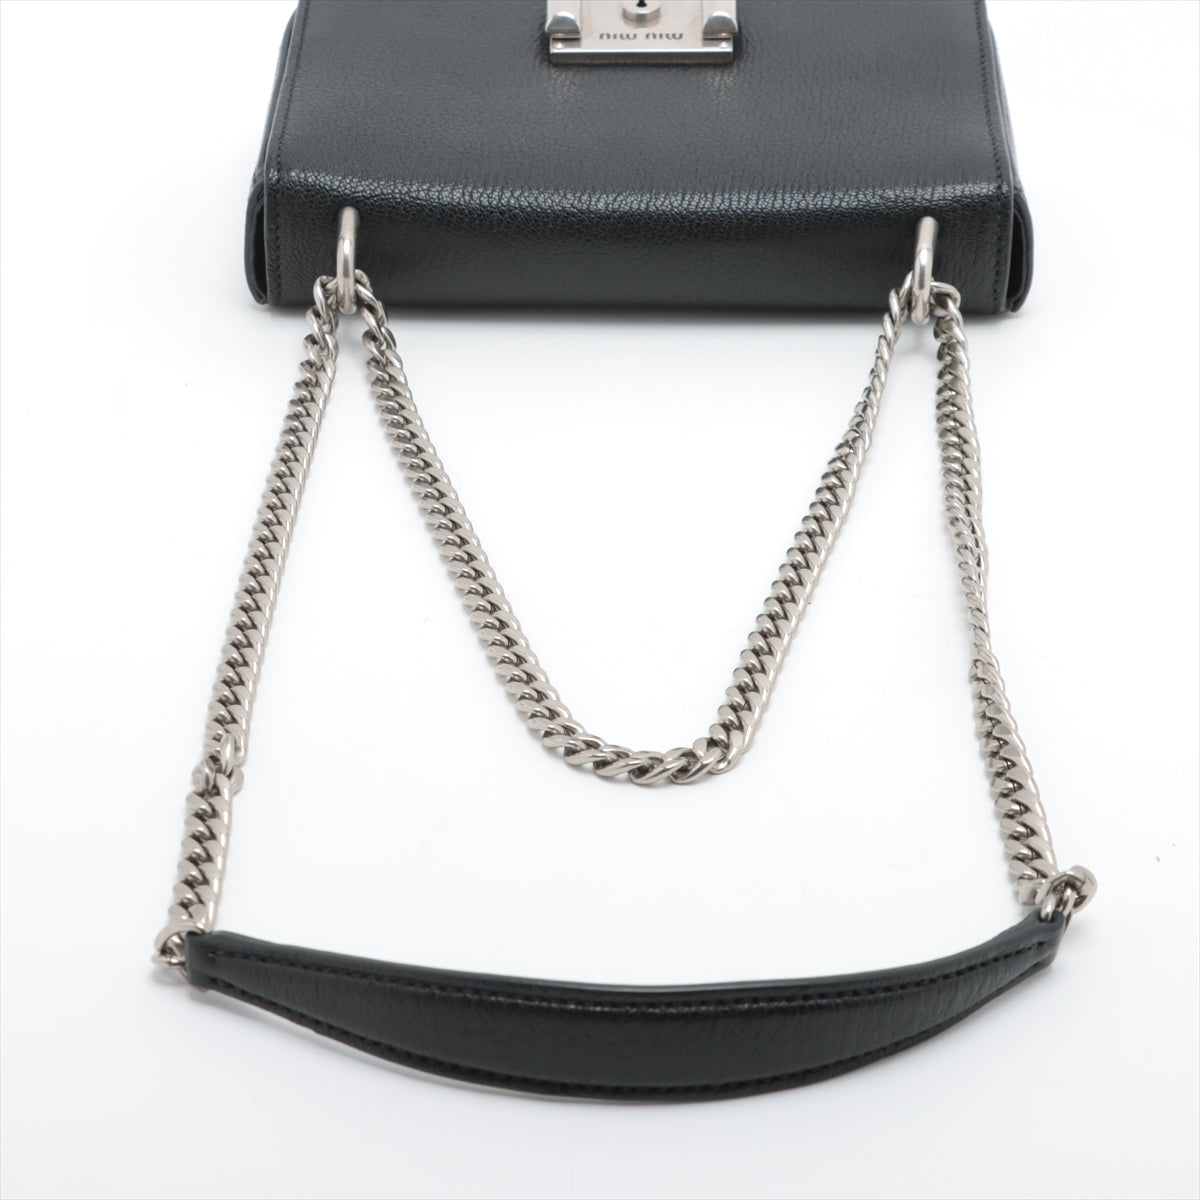 Miu Miu Leather Chain shoulder bag Black